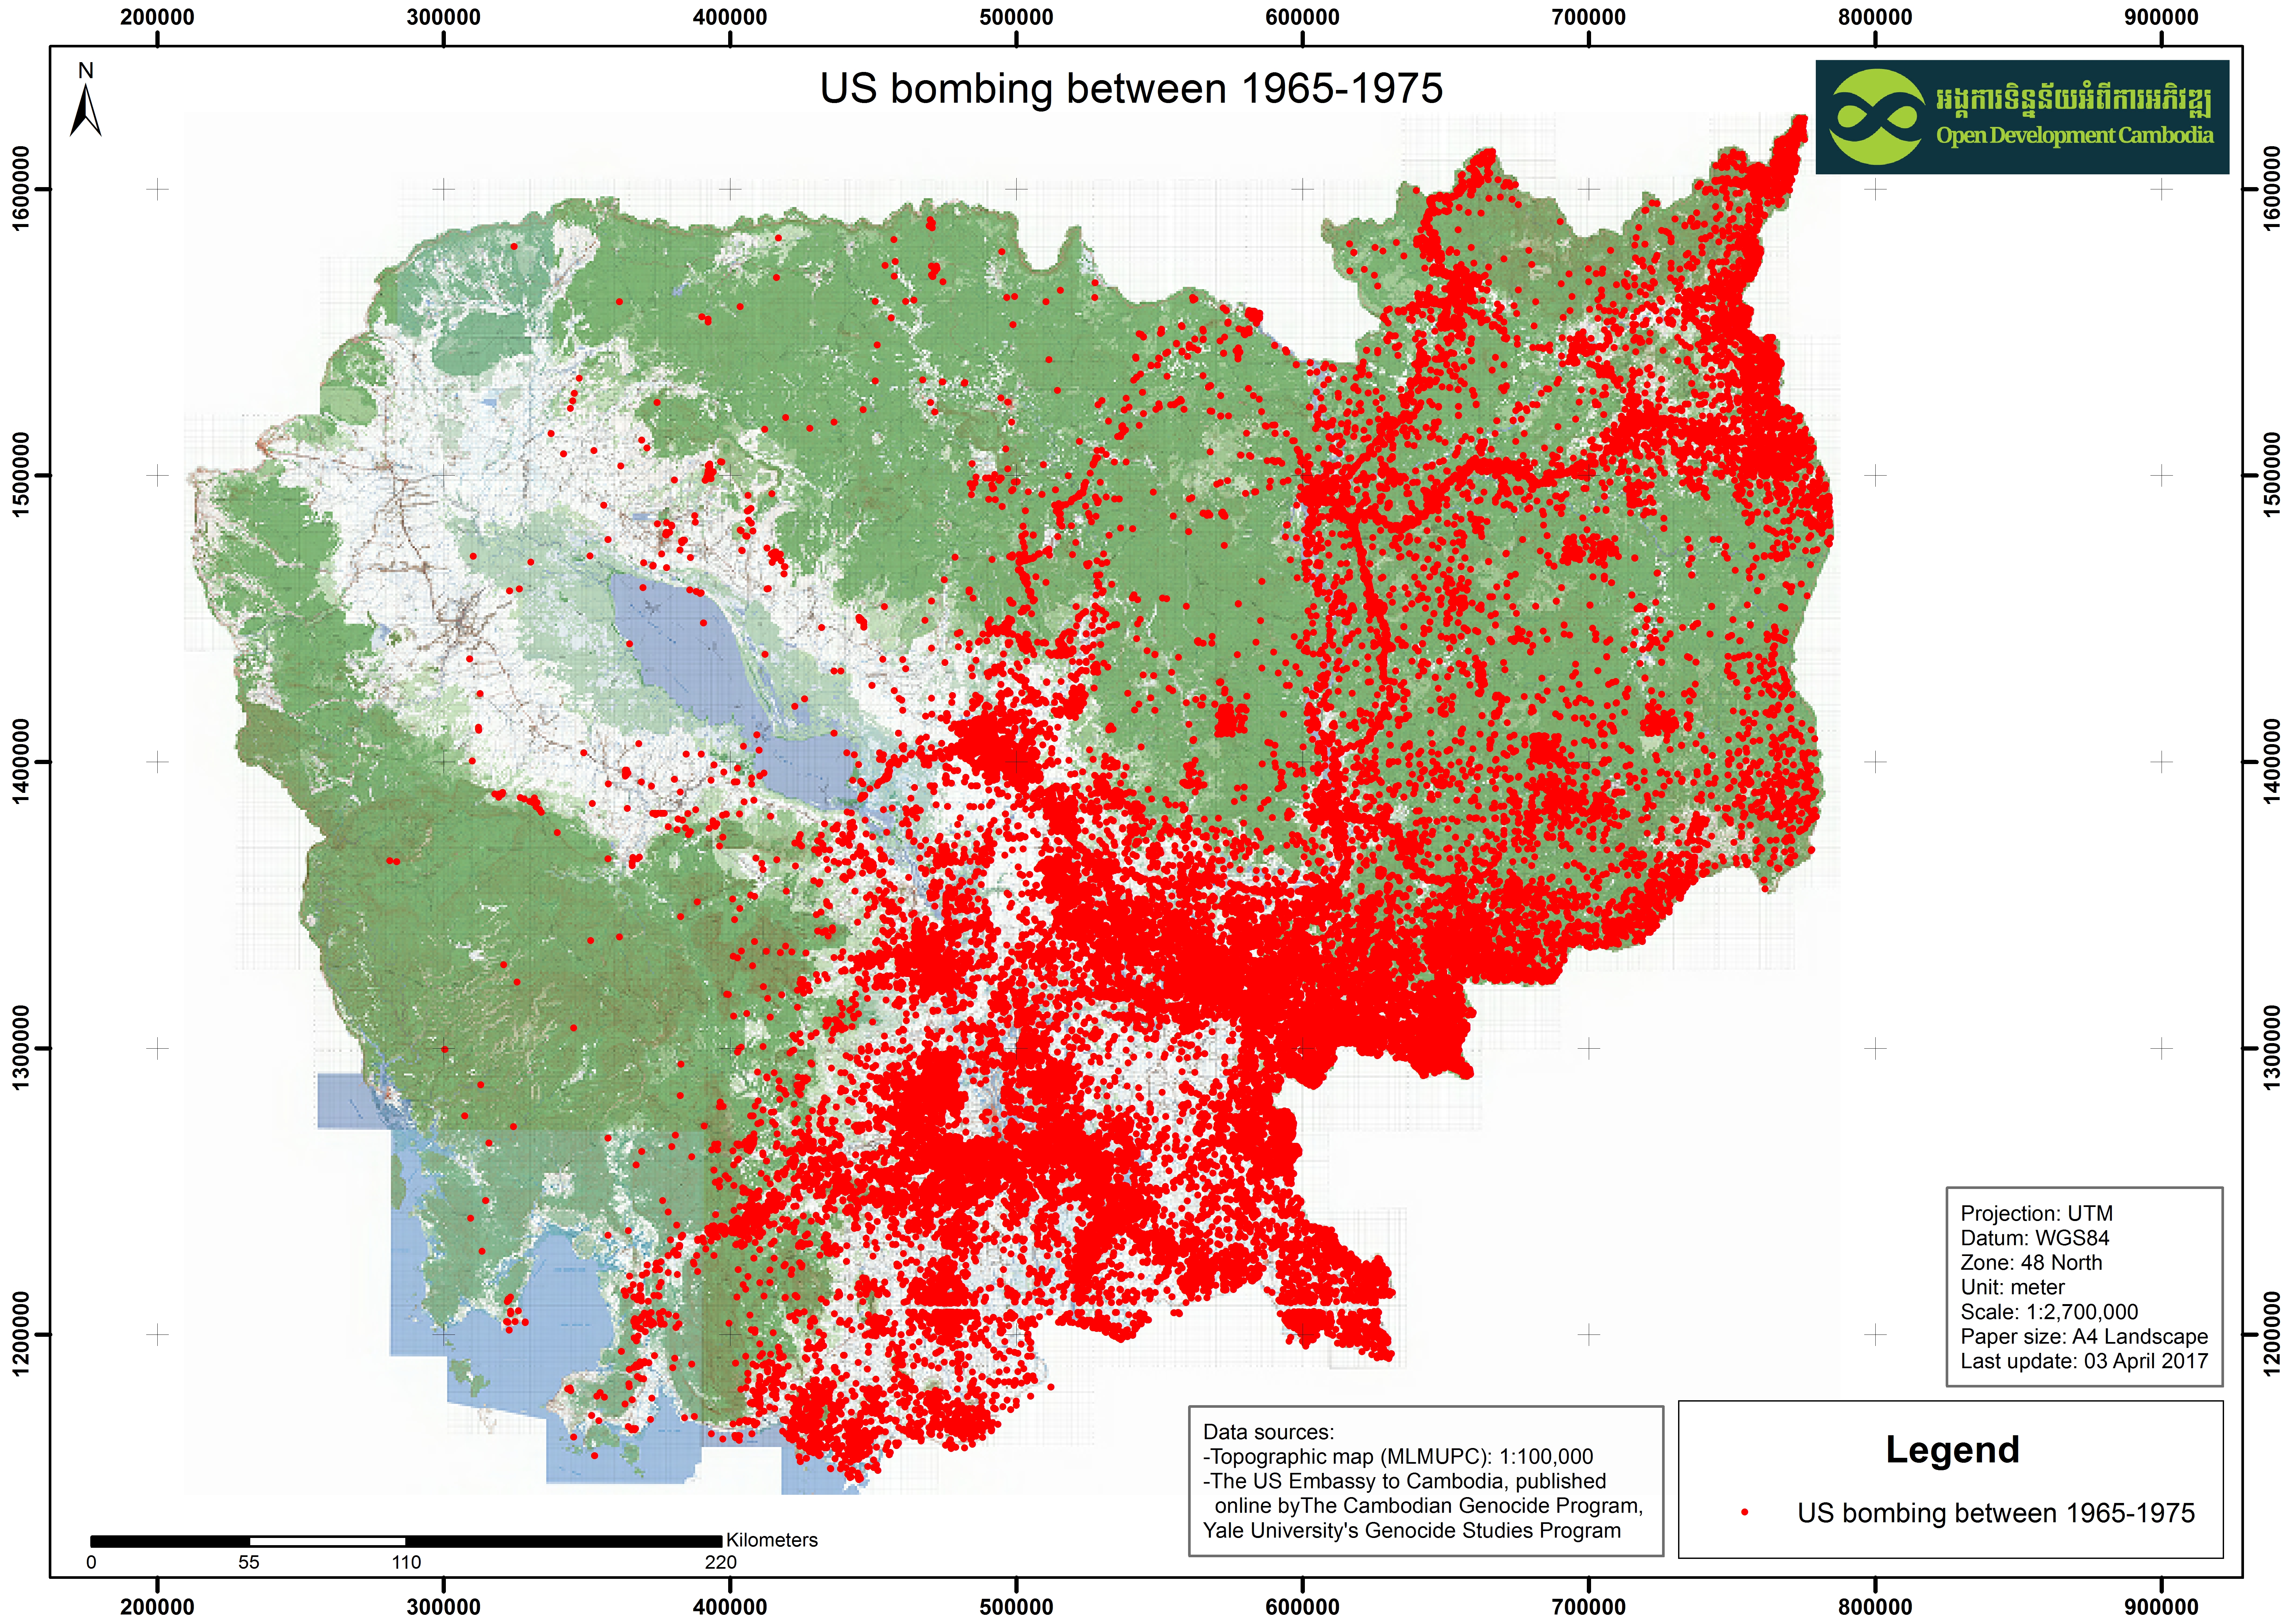 US bombing in Cambodia (1965-1975)